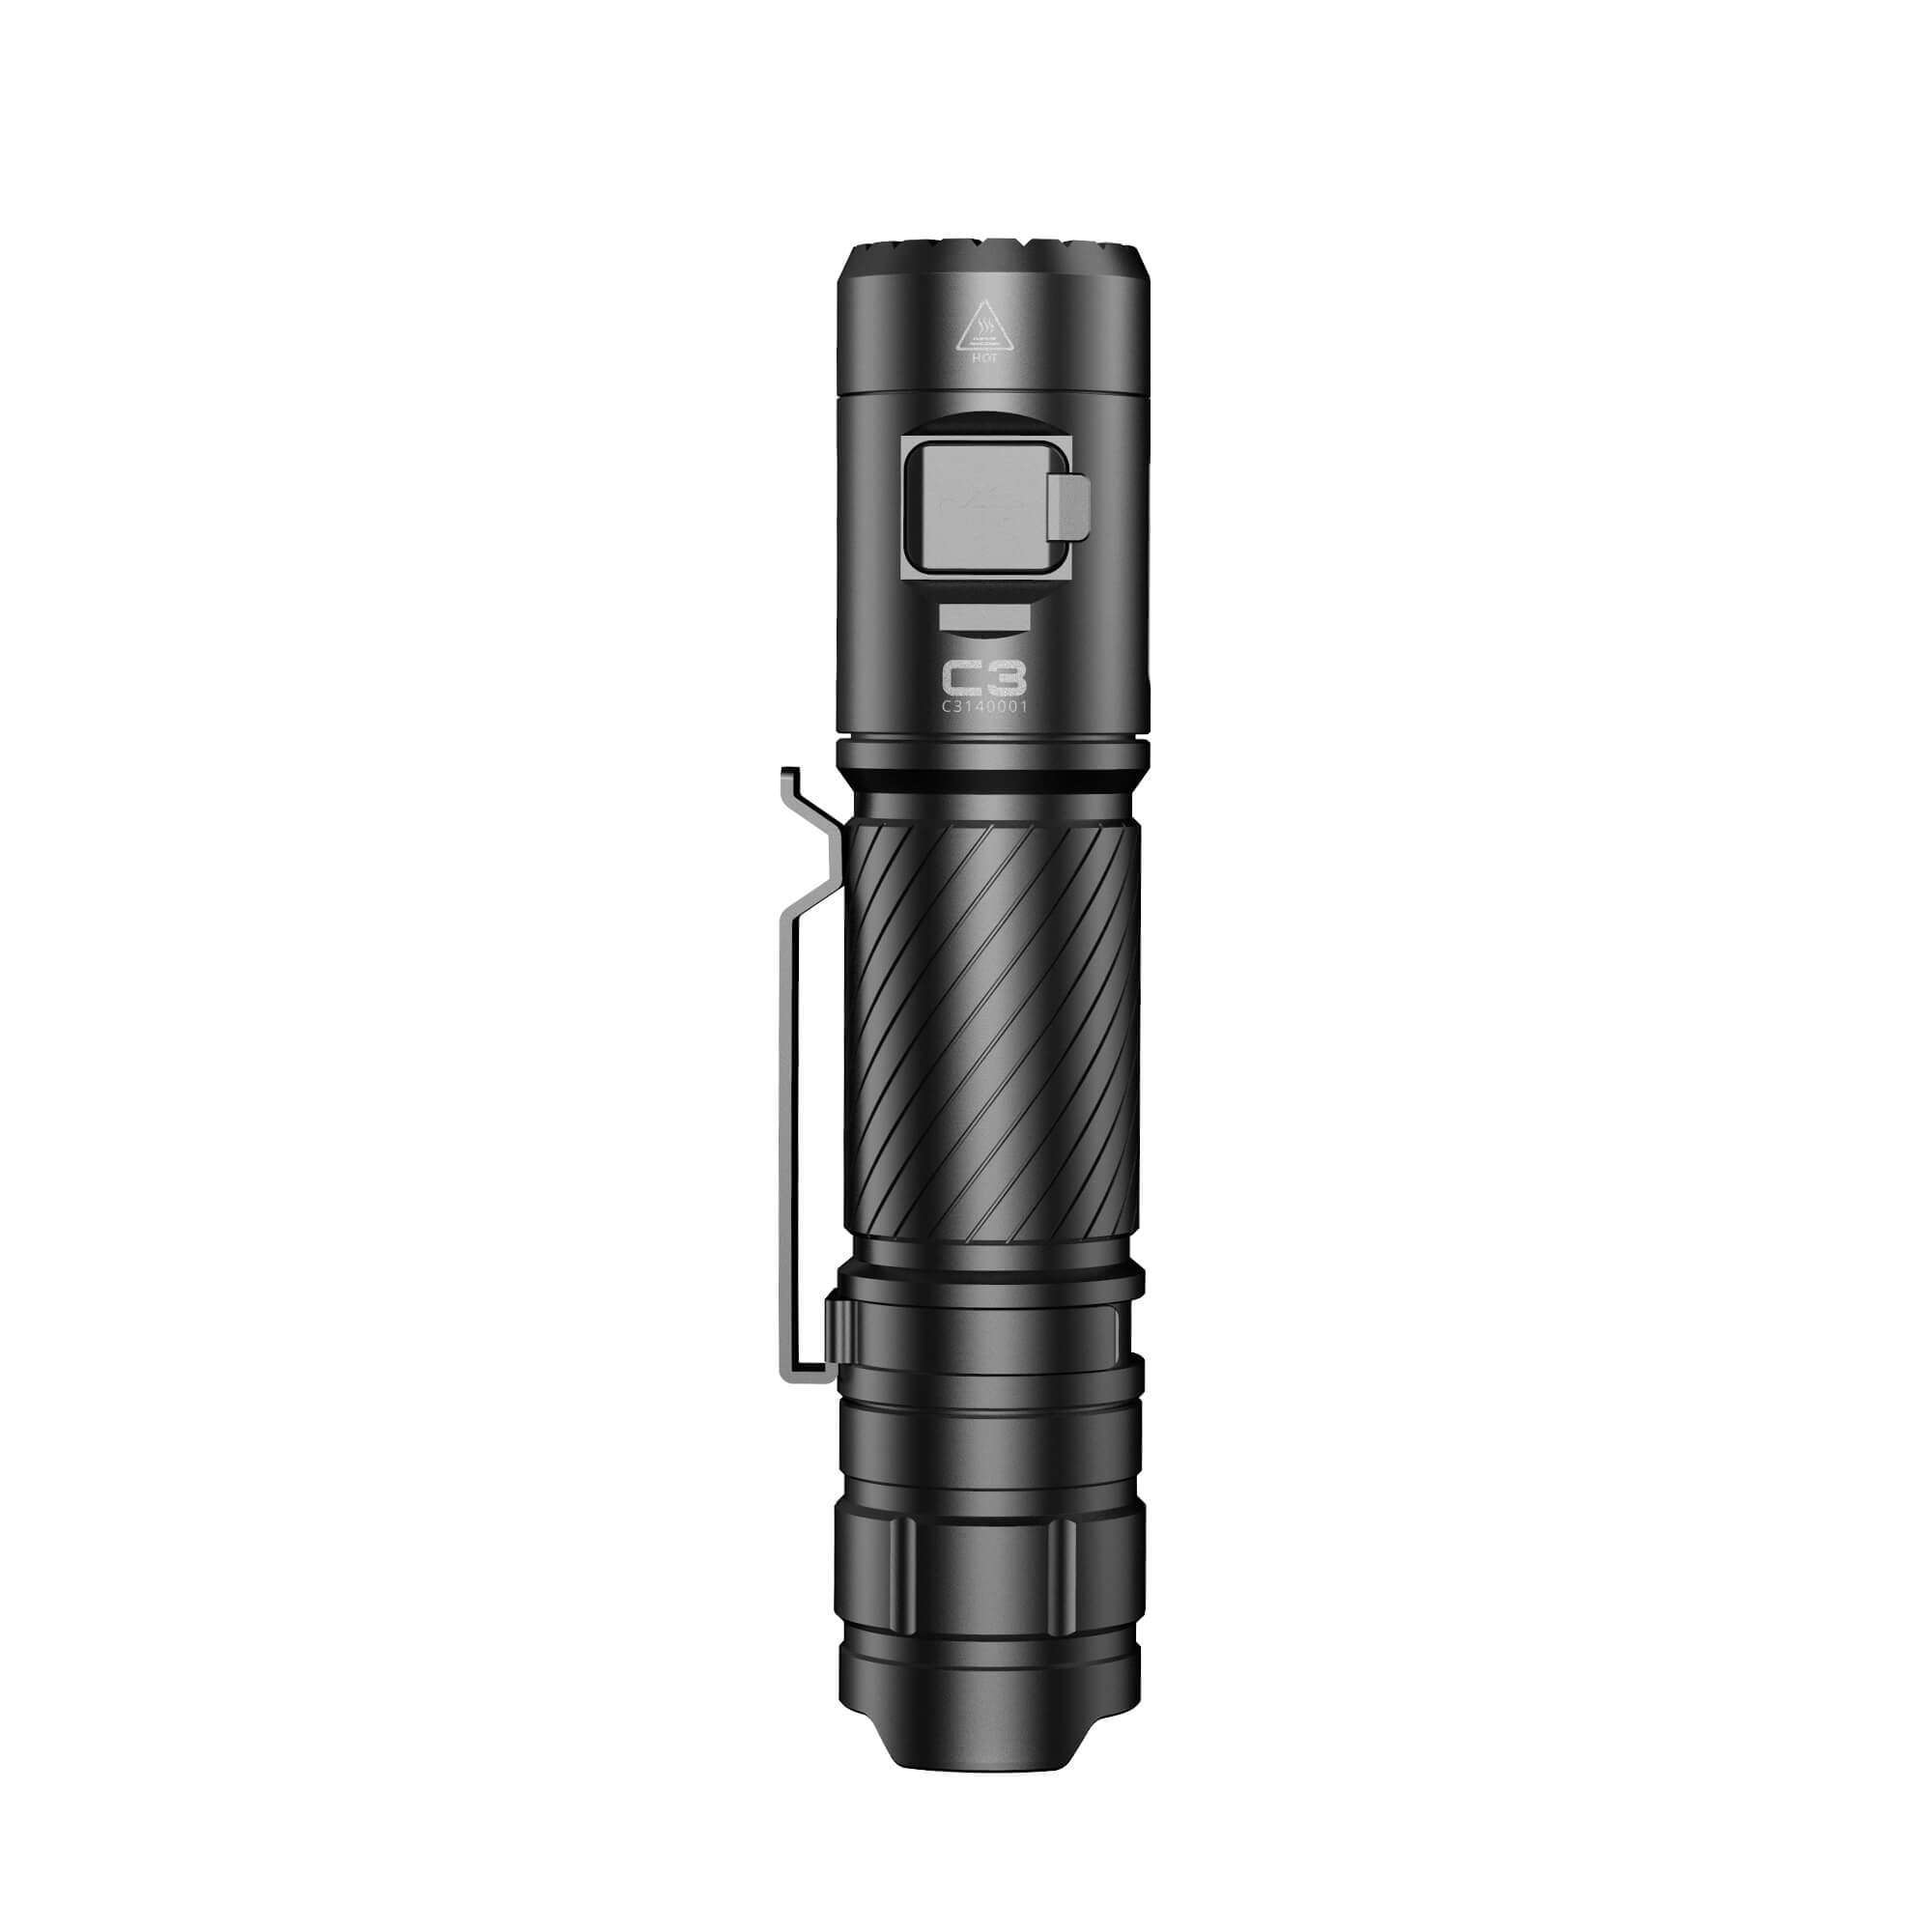 Wuben C3 Rechargeable Compact Flashlight (1200 Lumens, 179 Metres)